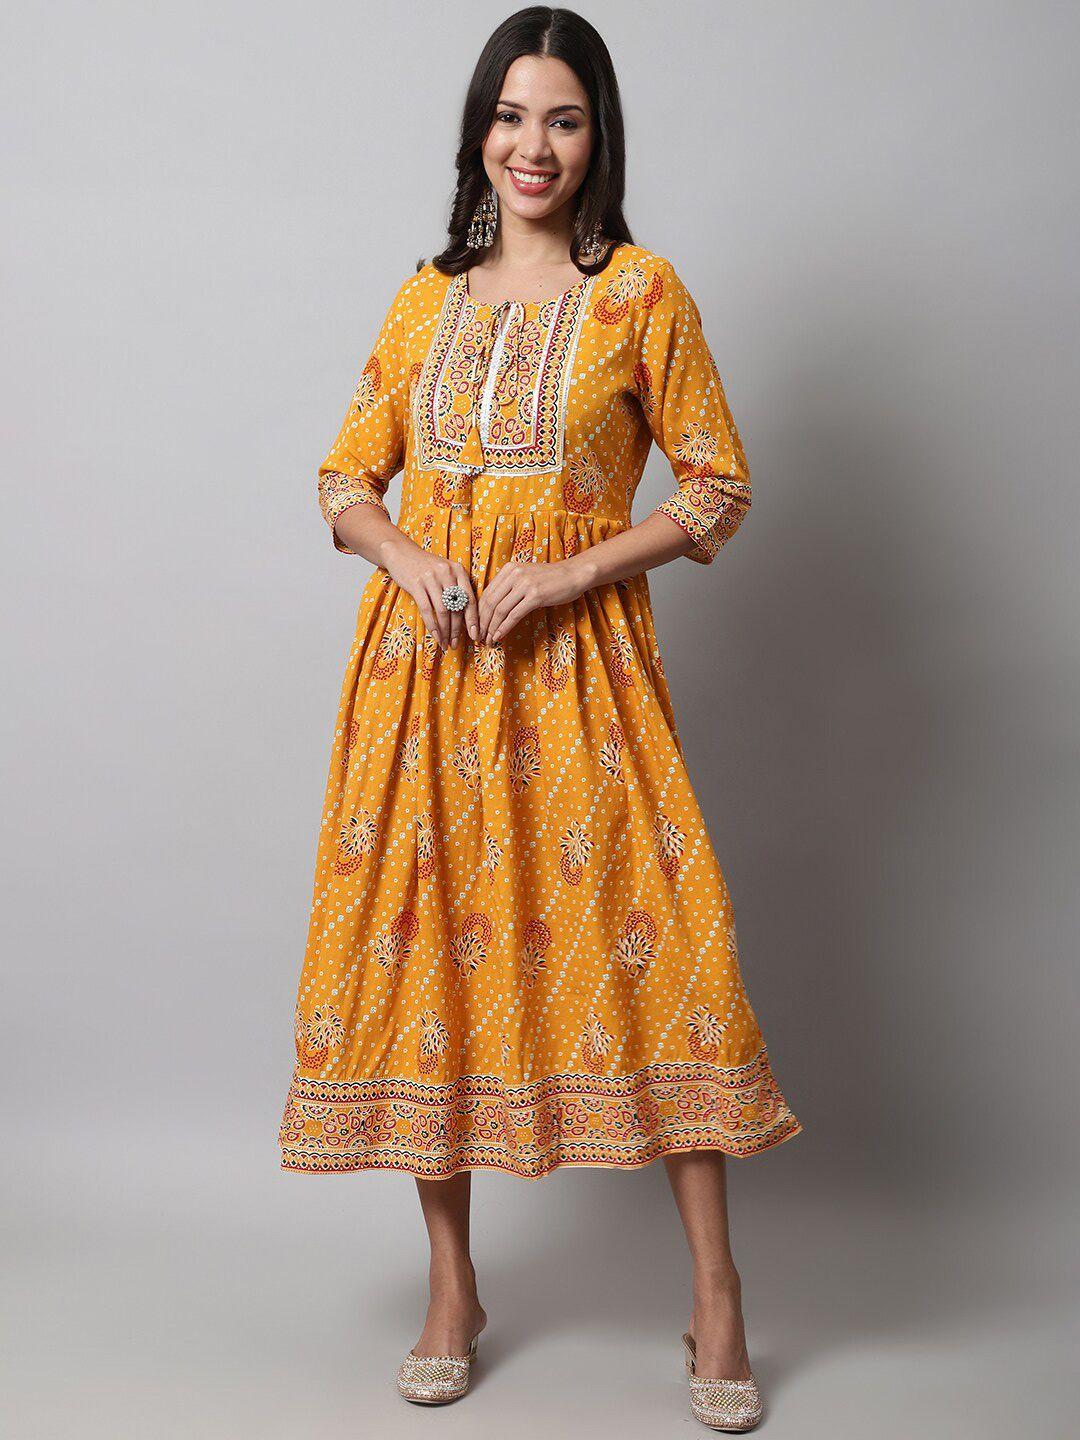 kalini ethnic printed midi fit & flare dress